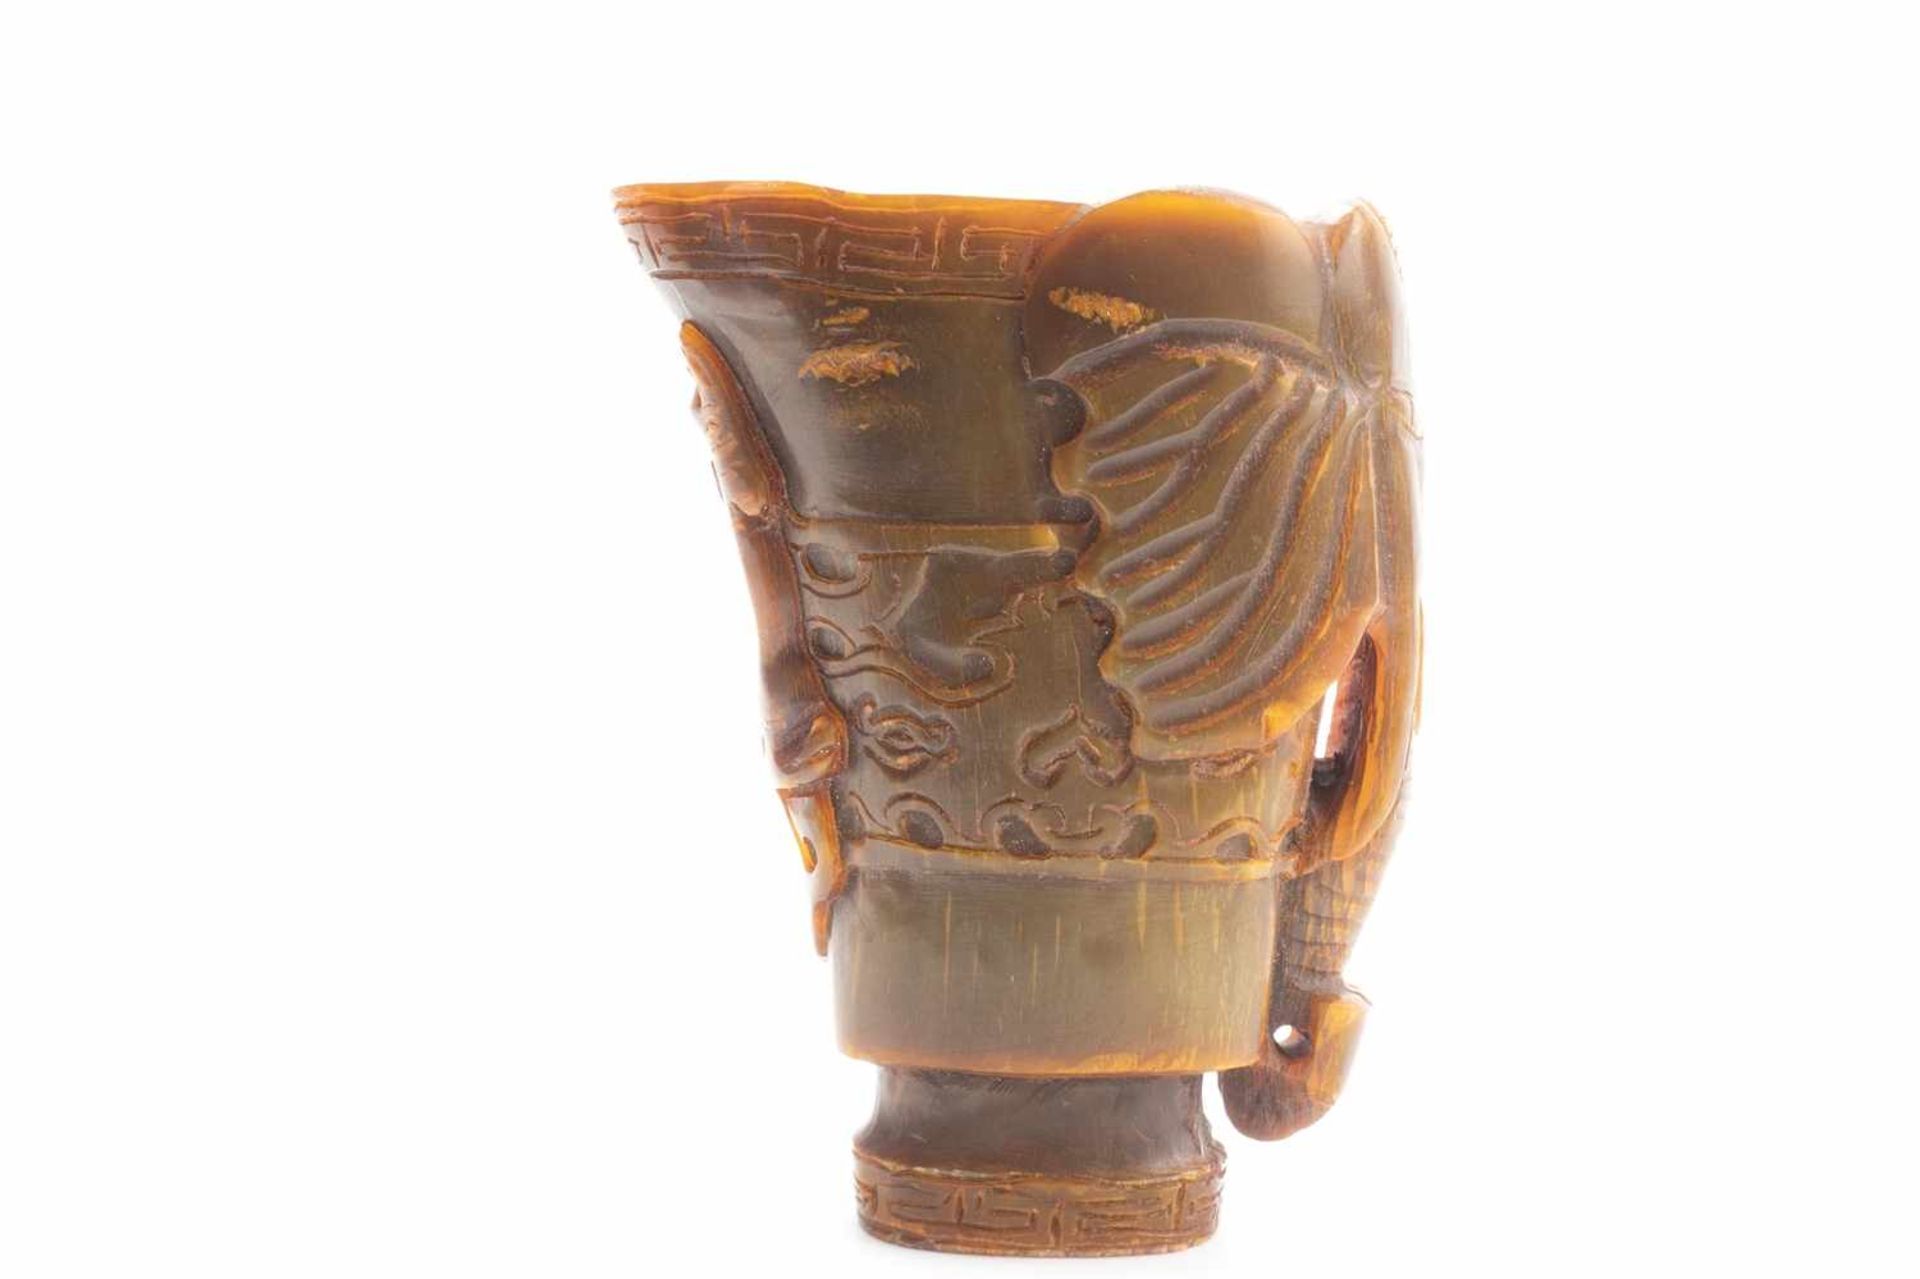 Carved ornate jug, China